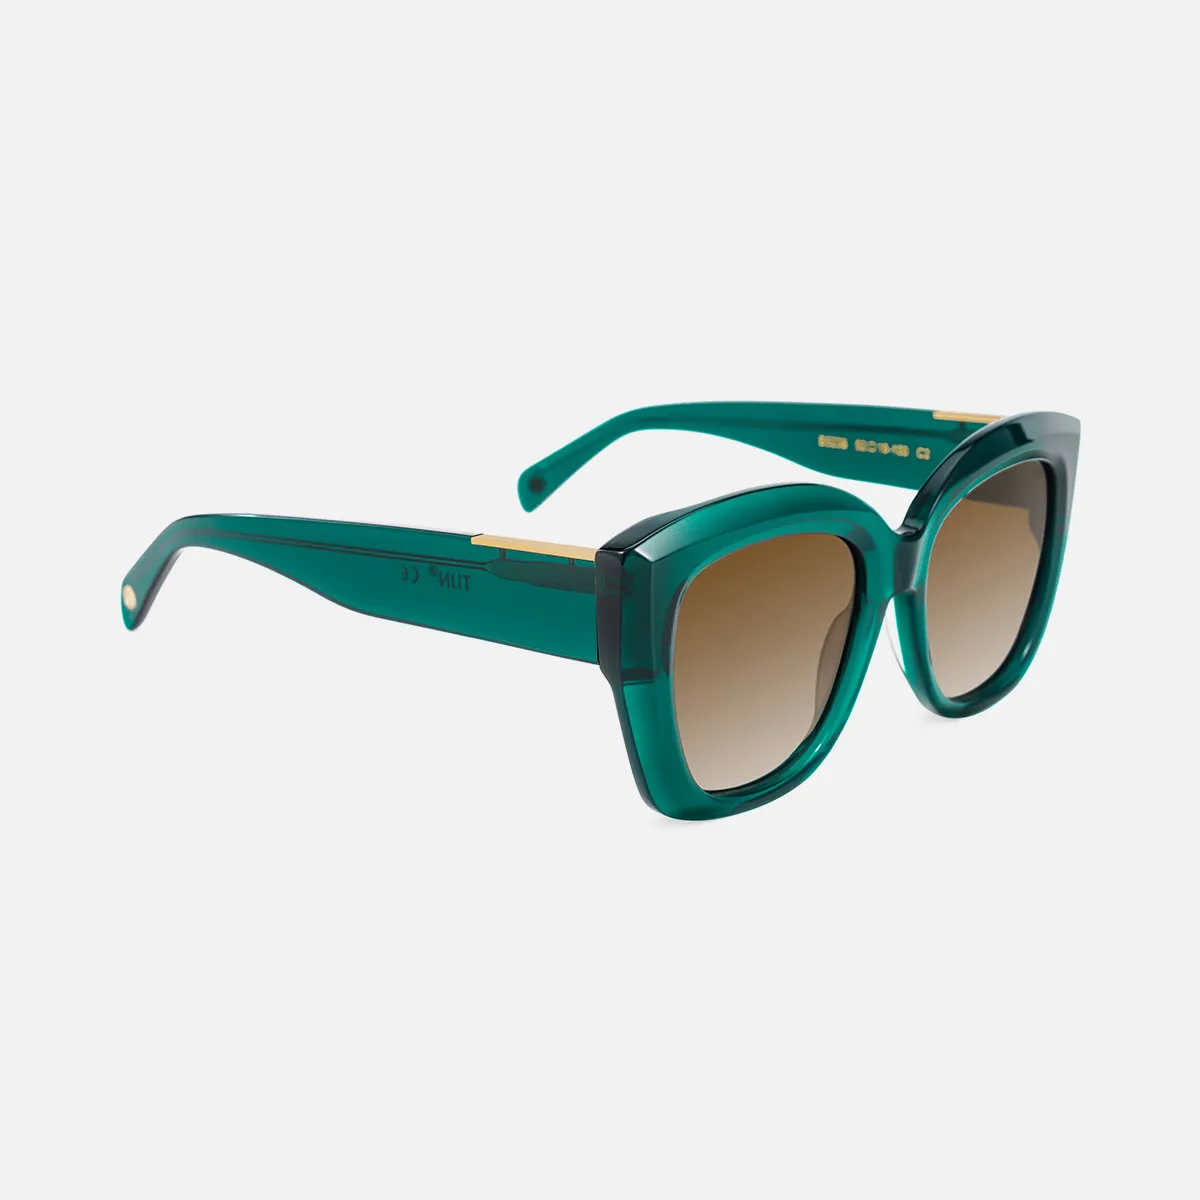 Classic Green Sunglasses | Zenni Optical Blog